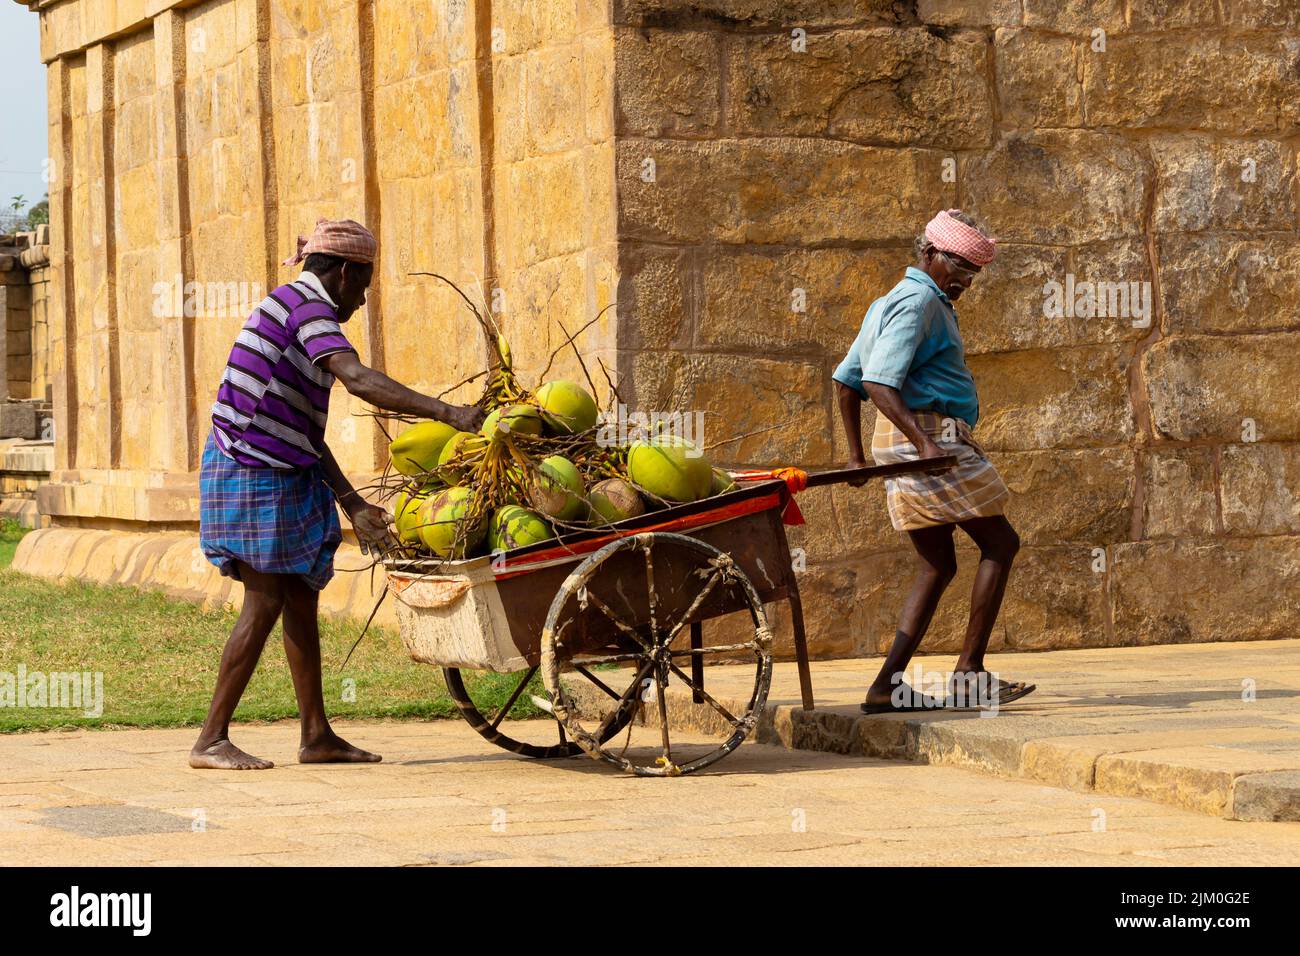 Gente vendiendo cocos en carro fuera del templo, Gangaikonda Cholapuram, Ariyalur, Tamilnadu, India. Foto de stock